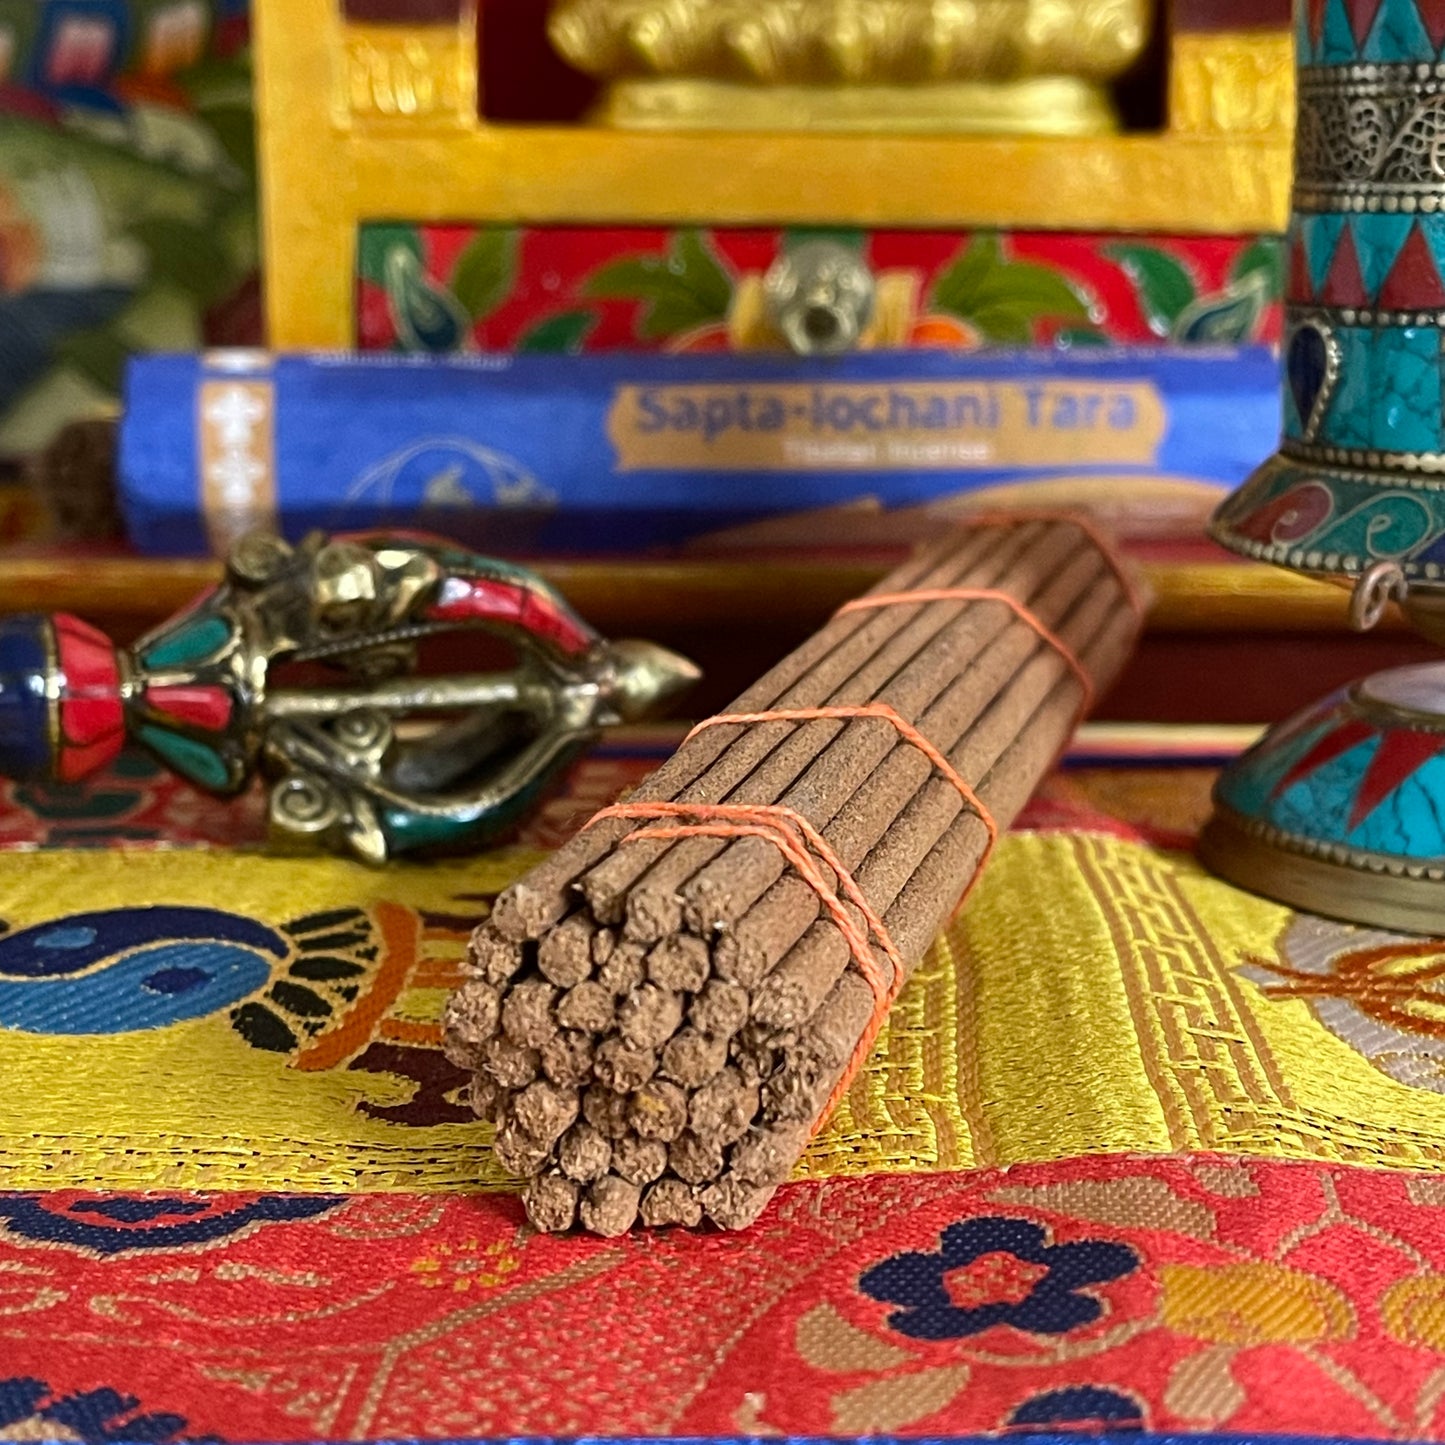 Chandra Devi Sapta Lochani Tara  Tibetan Incense